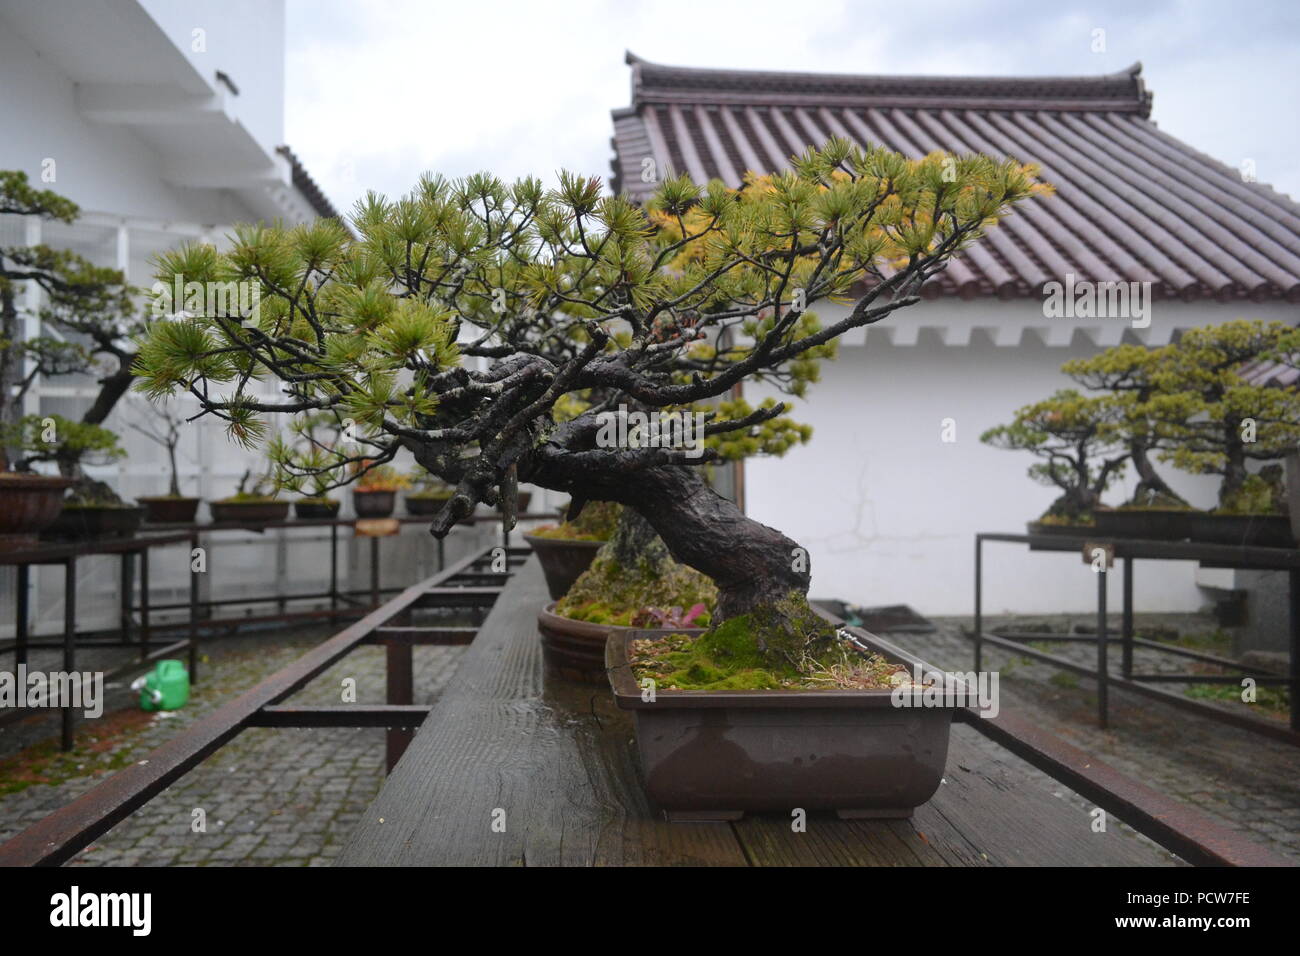 Bonsai trees on display in Japan Stock Photo